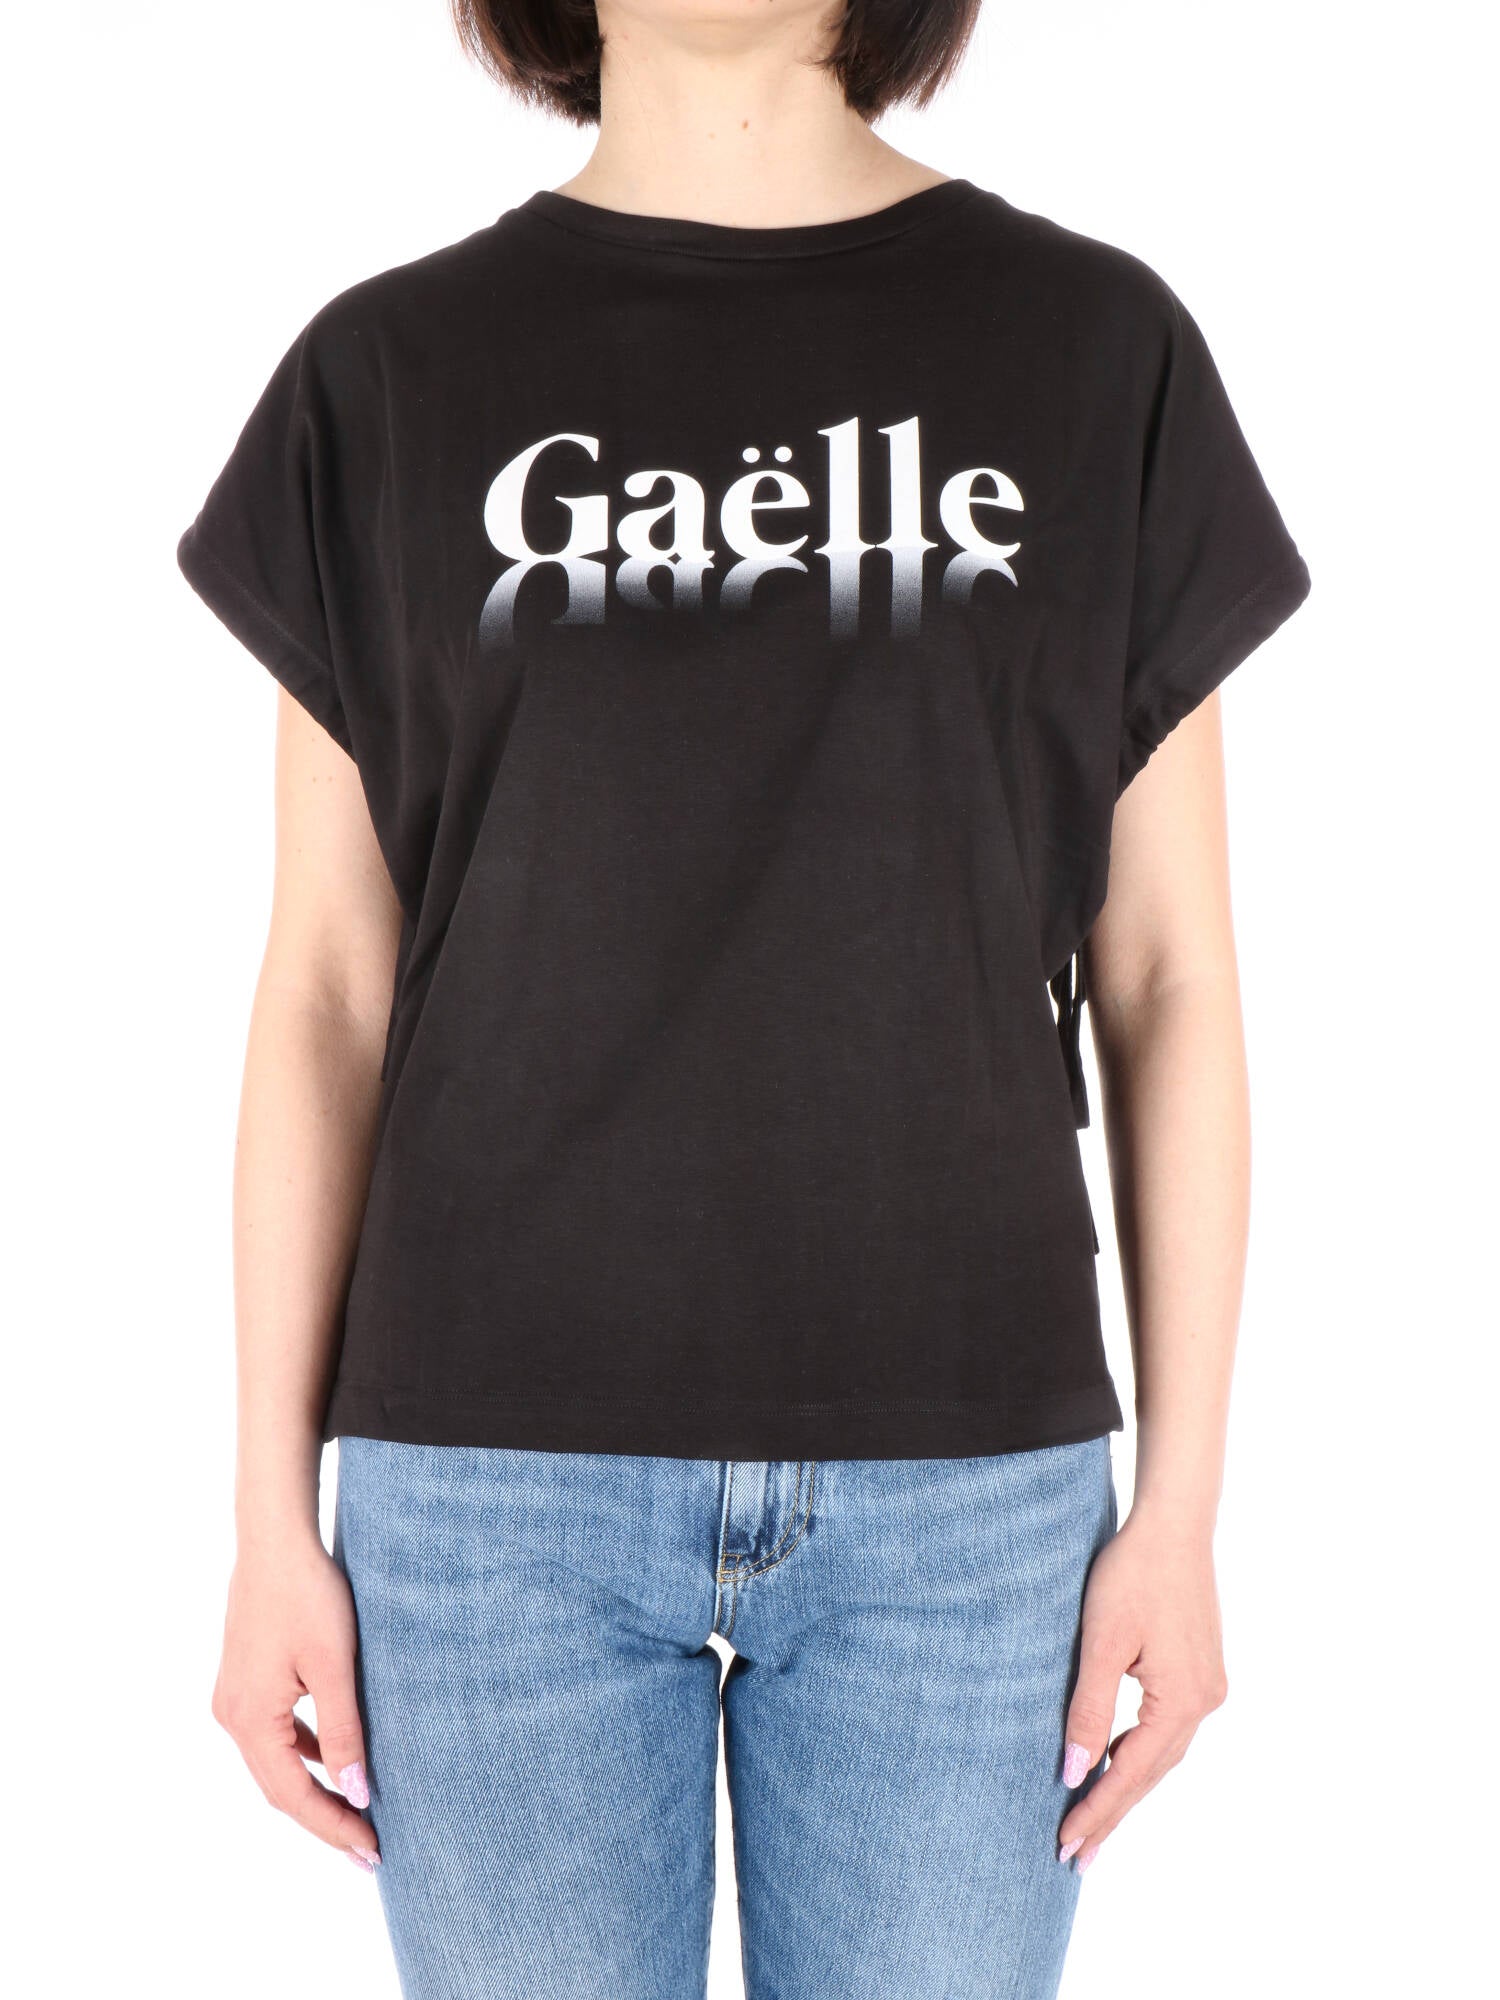 Gaelle Paris t-shirt nera con logo